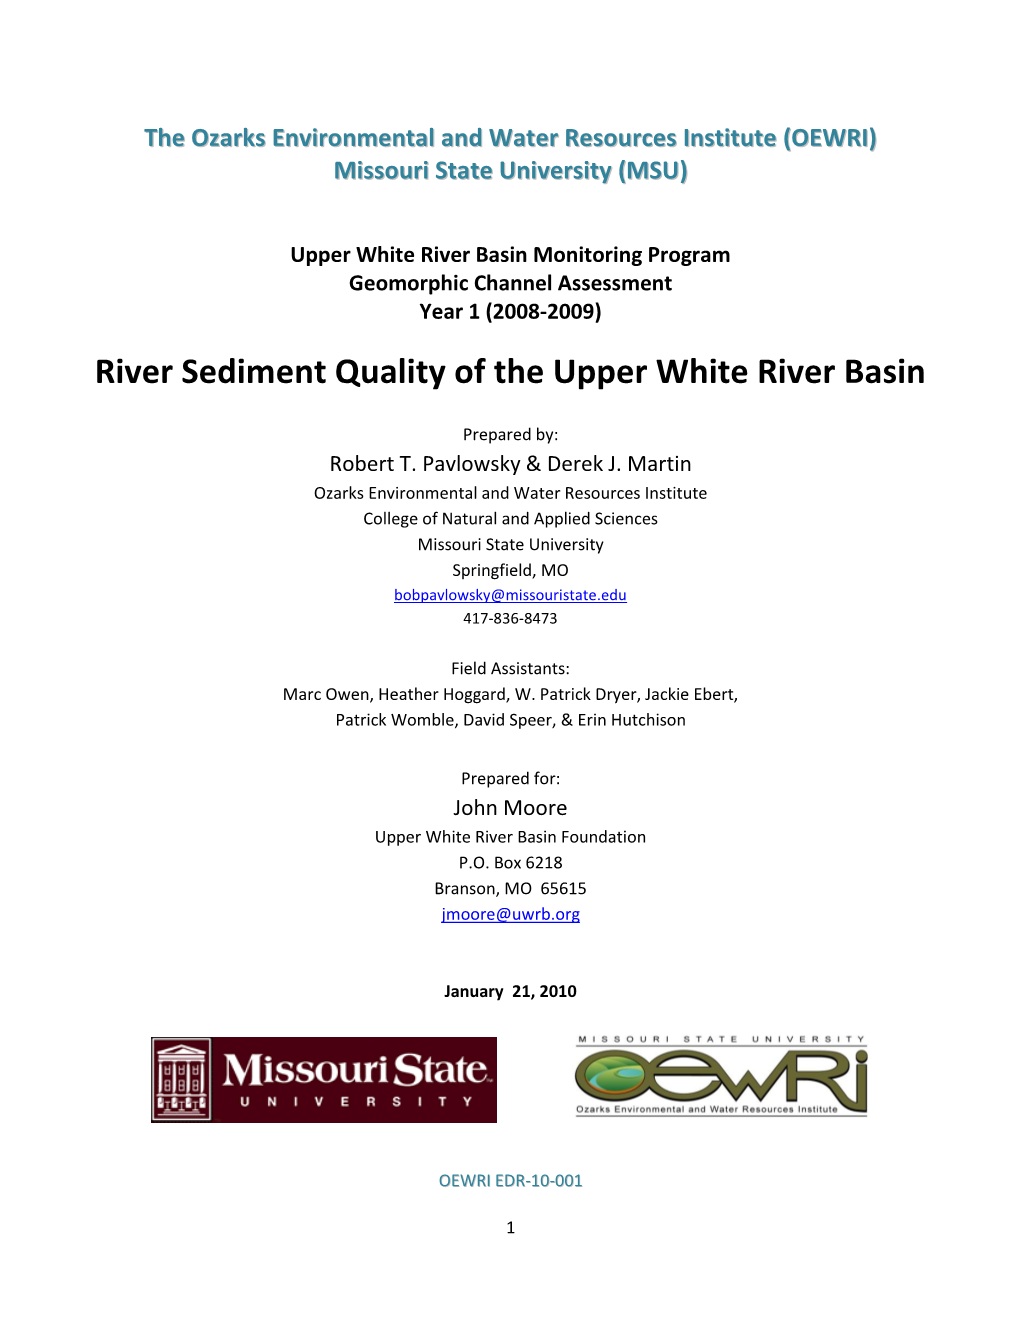 River Sediment Quality of the Upper White River Basin